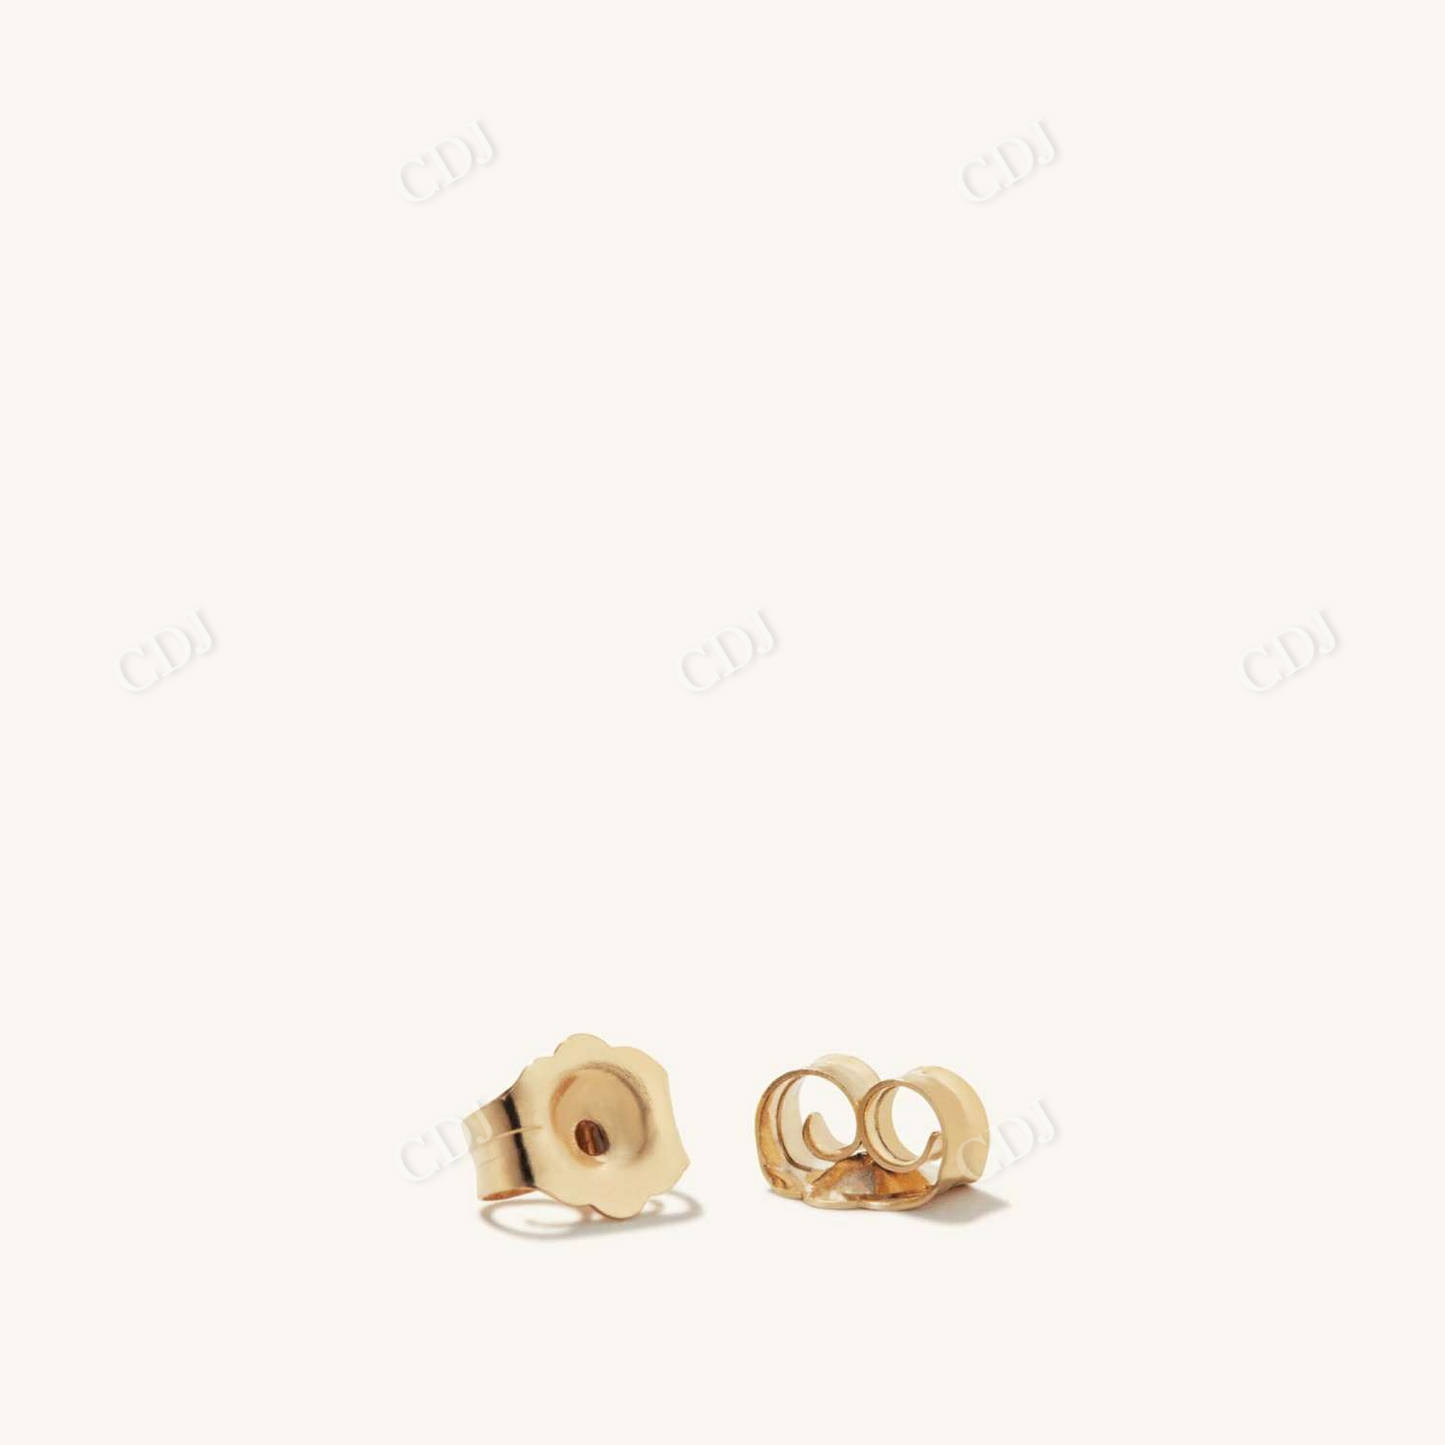 Tiny Flat Button Thumbtack Stud Earrings  customdiamjewel   